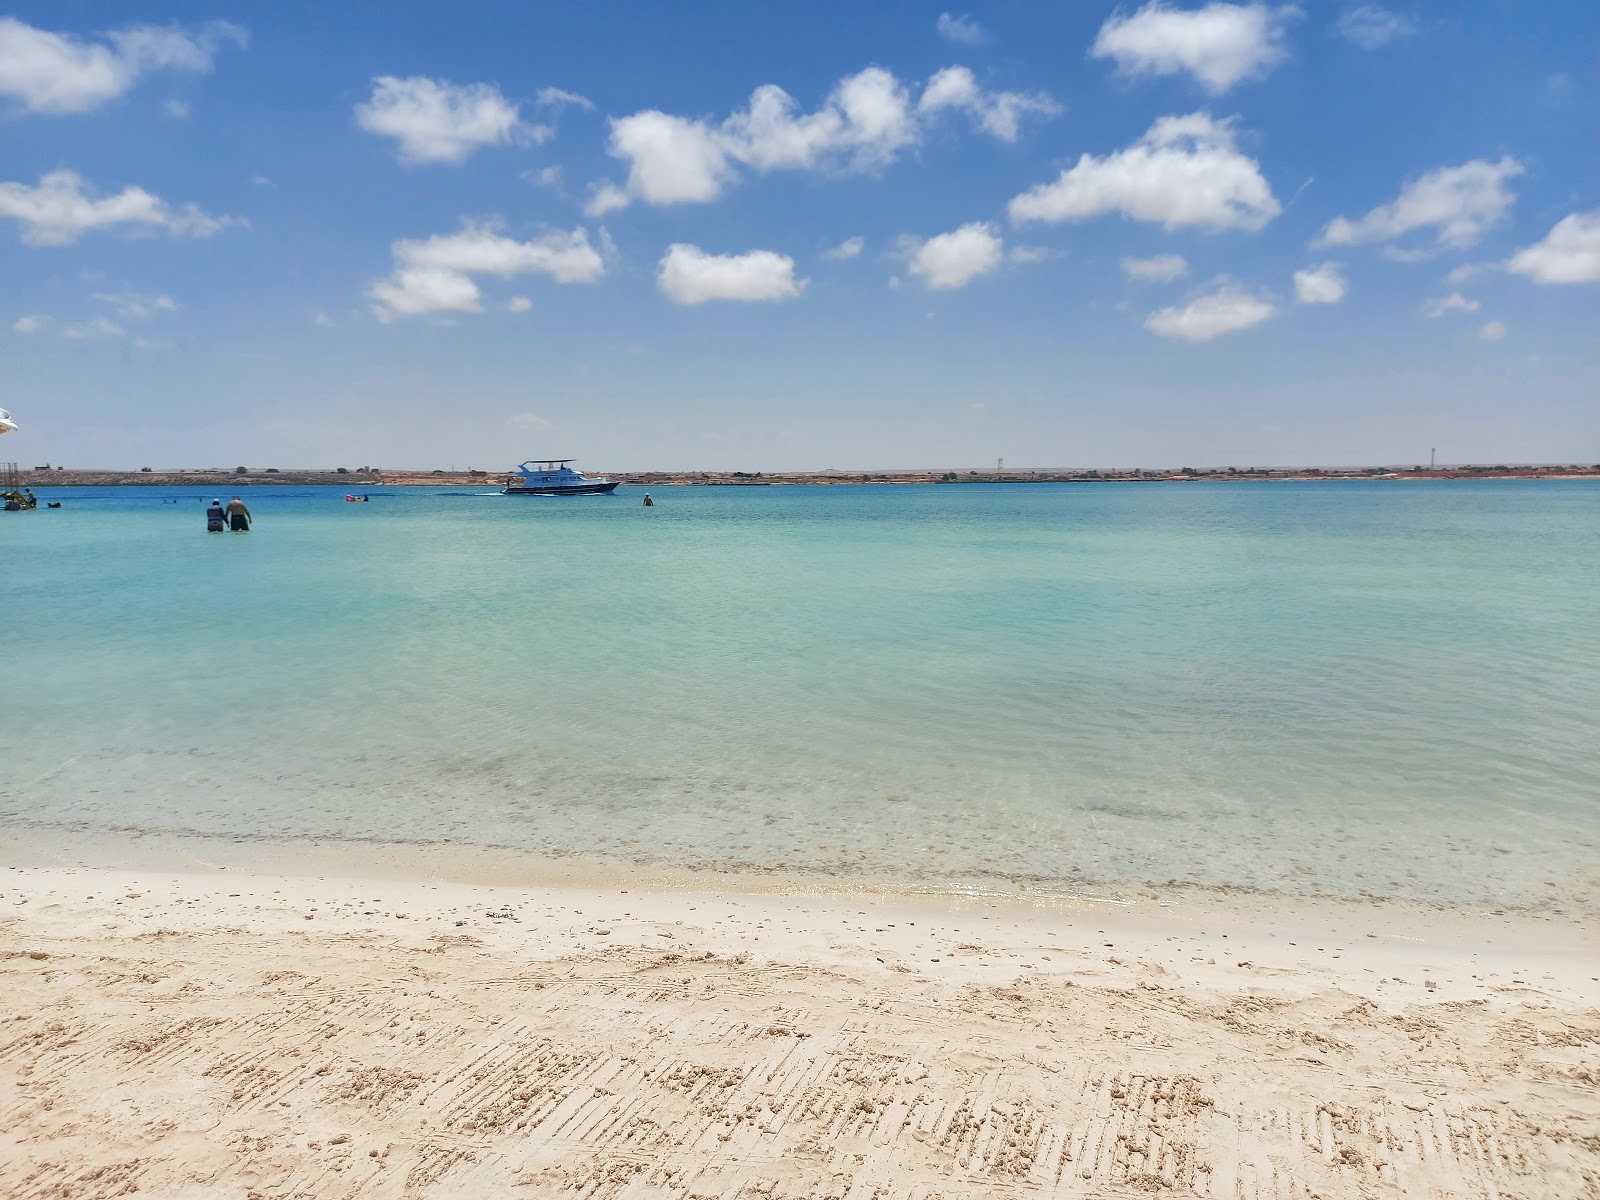 Foto de Eagles Resort in Cleopatra Beach com praia espaçosa